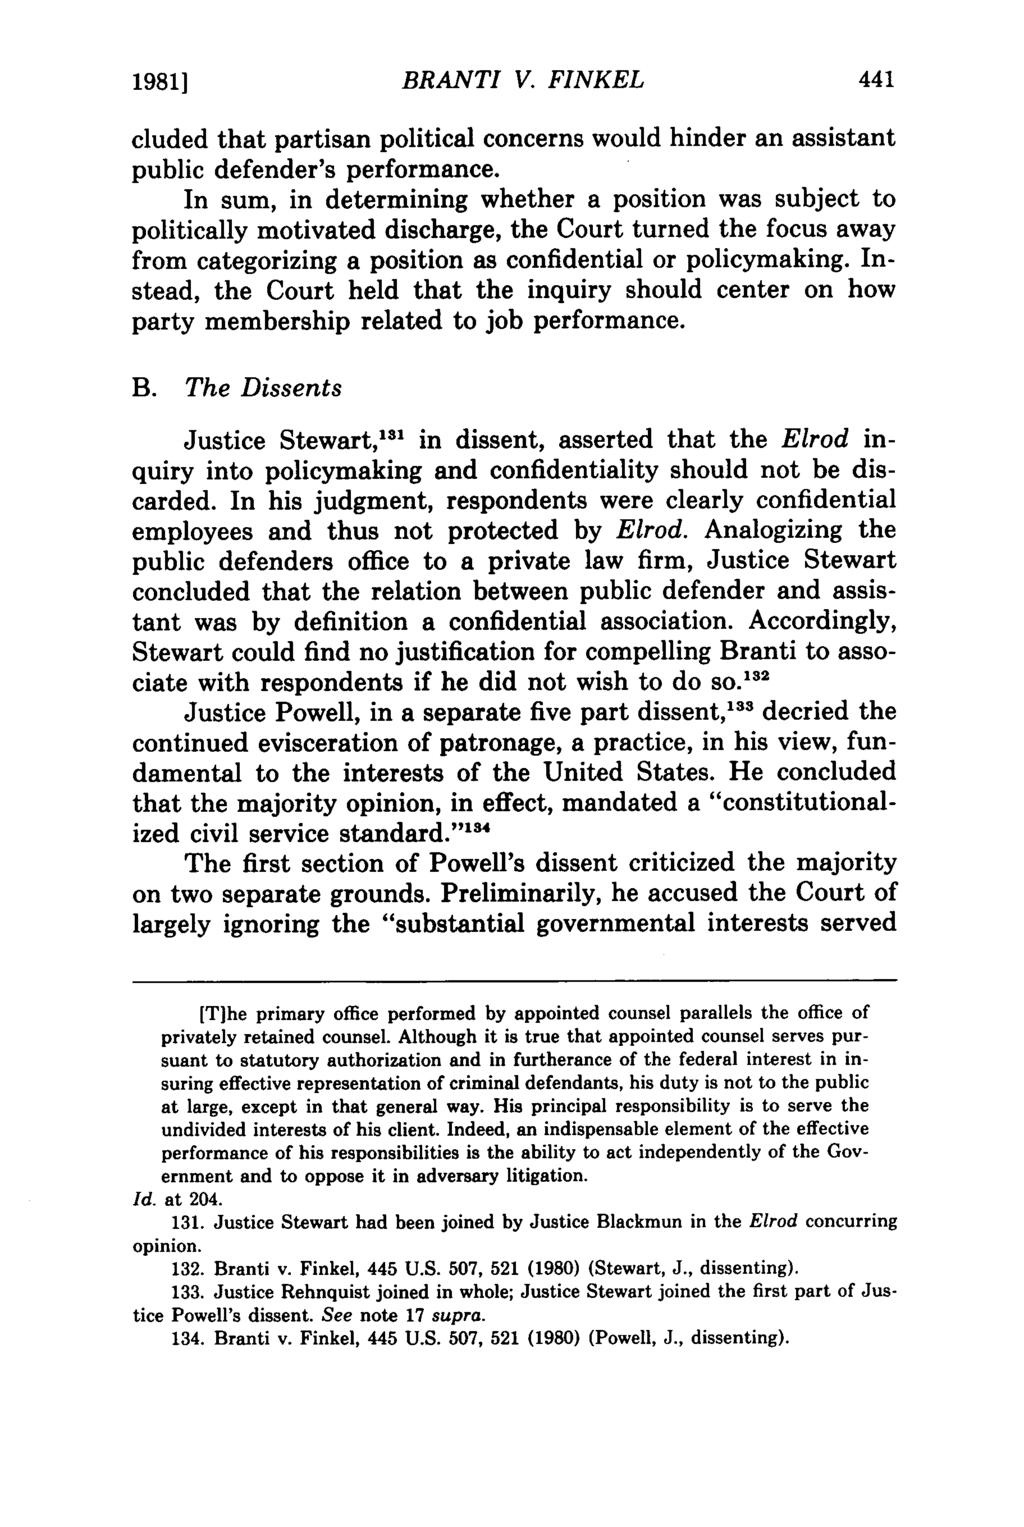 19811 BRANTI V. FINKEL cluded that partisan political concerns would hinder an assistant public defender's performance.